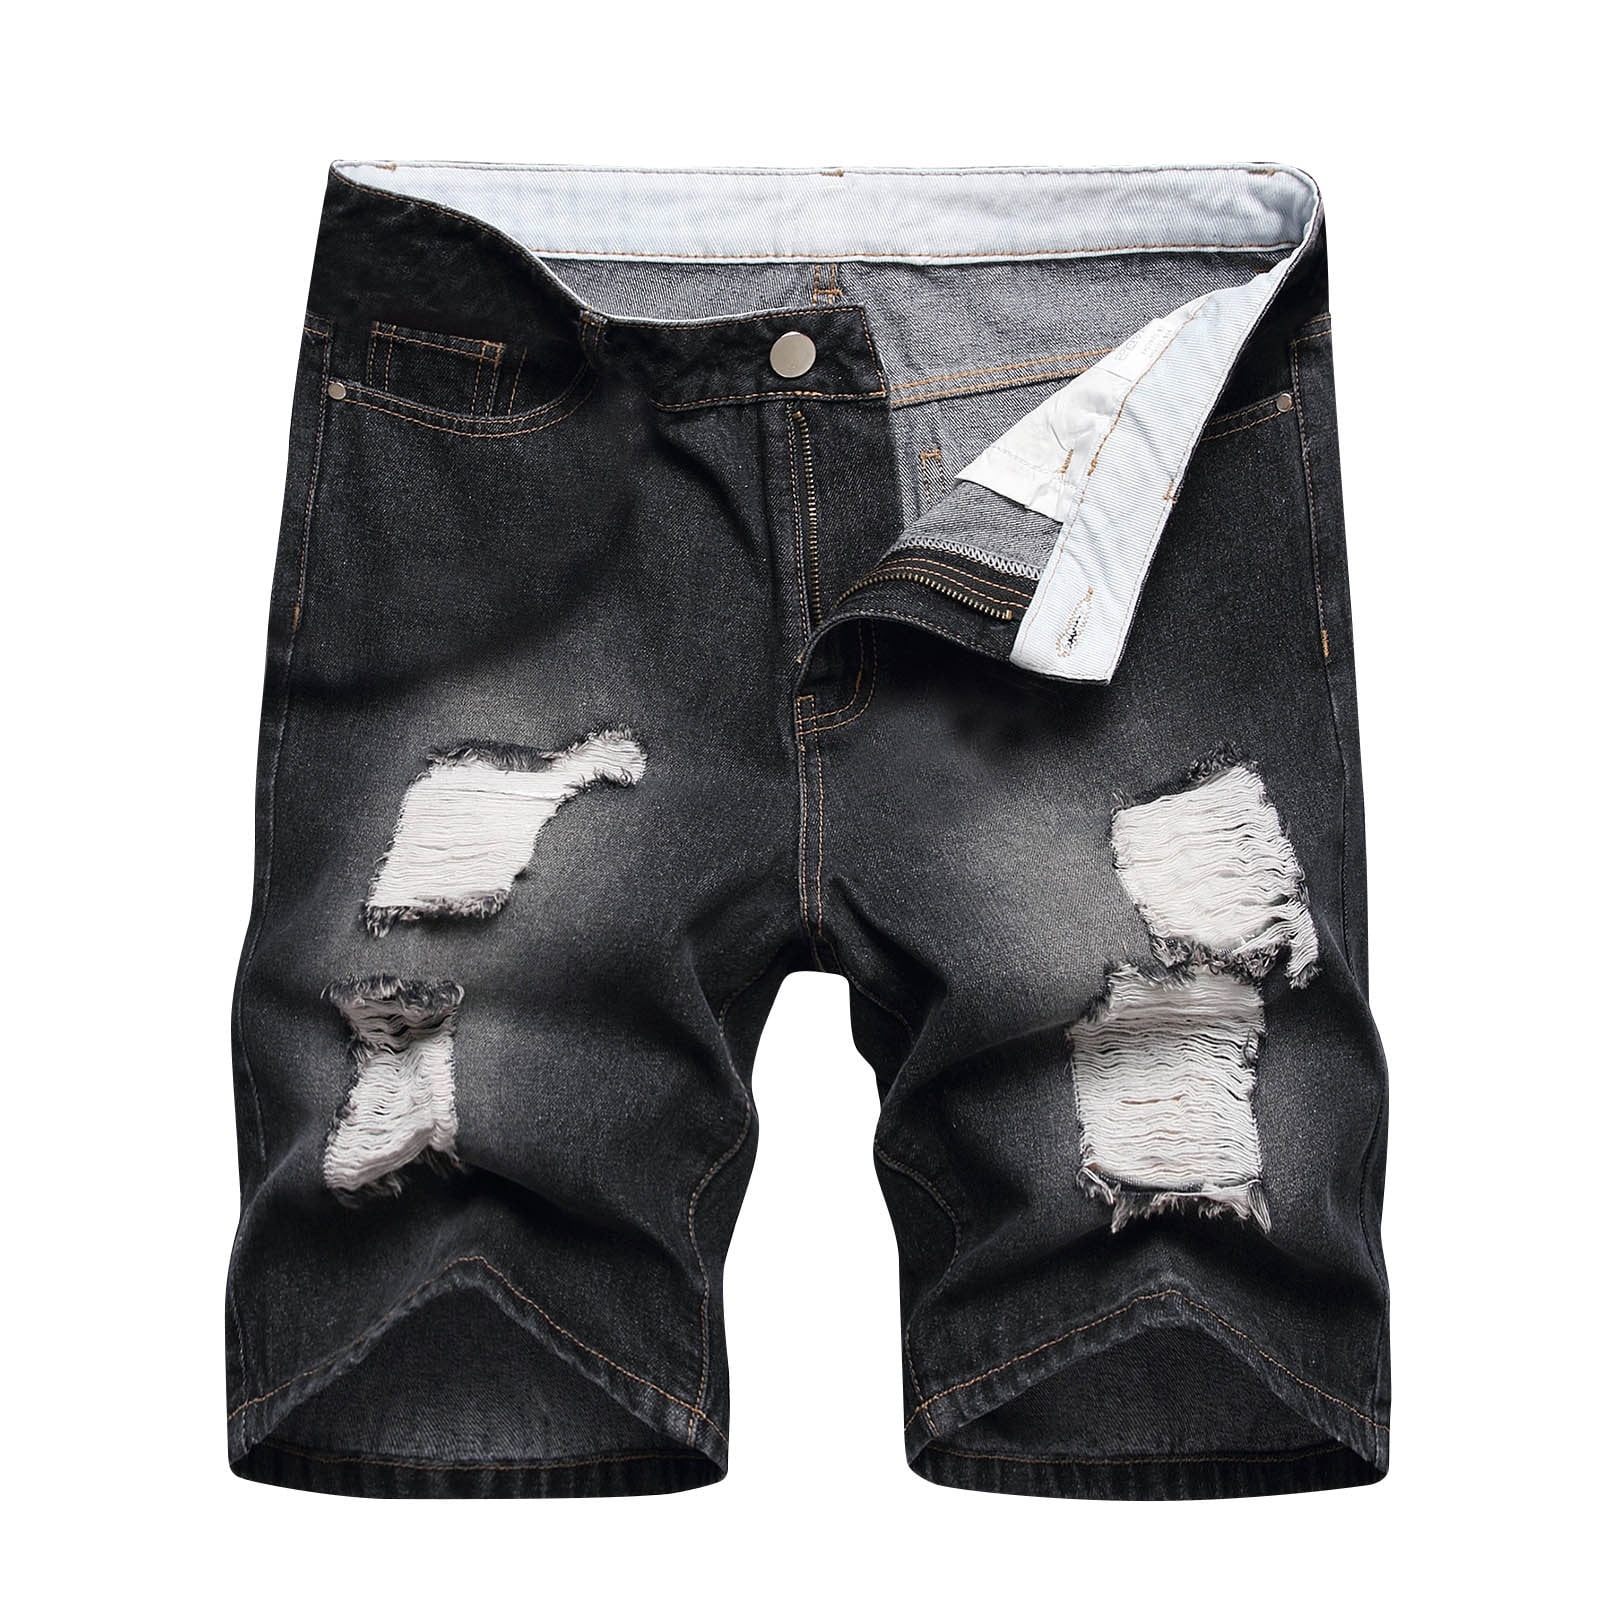 Amtdh Men's Short Jeans Clearance Solid Color Slim Fit Denim Shorts ...